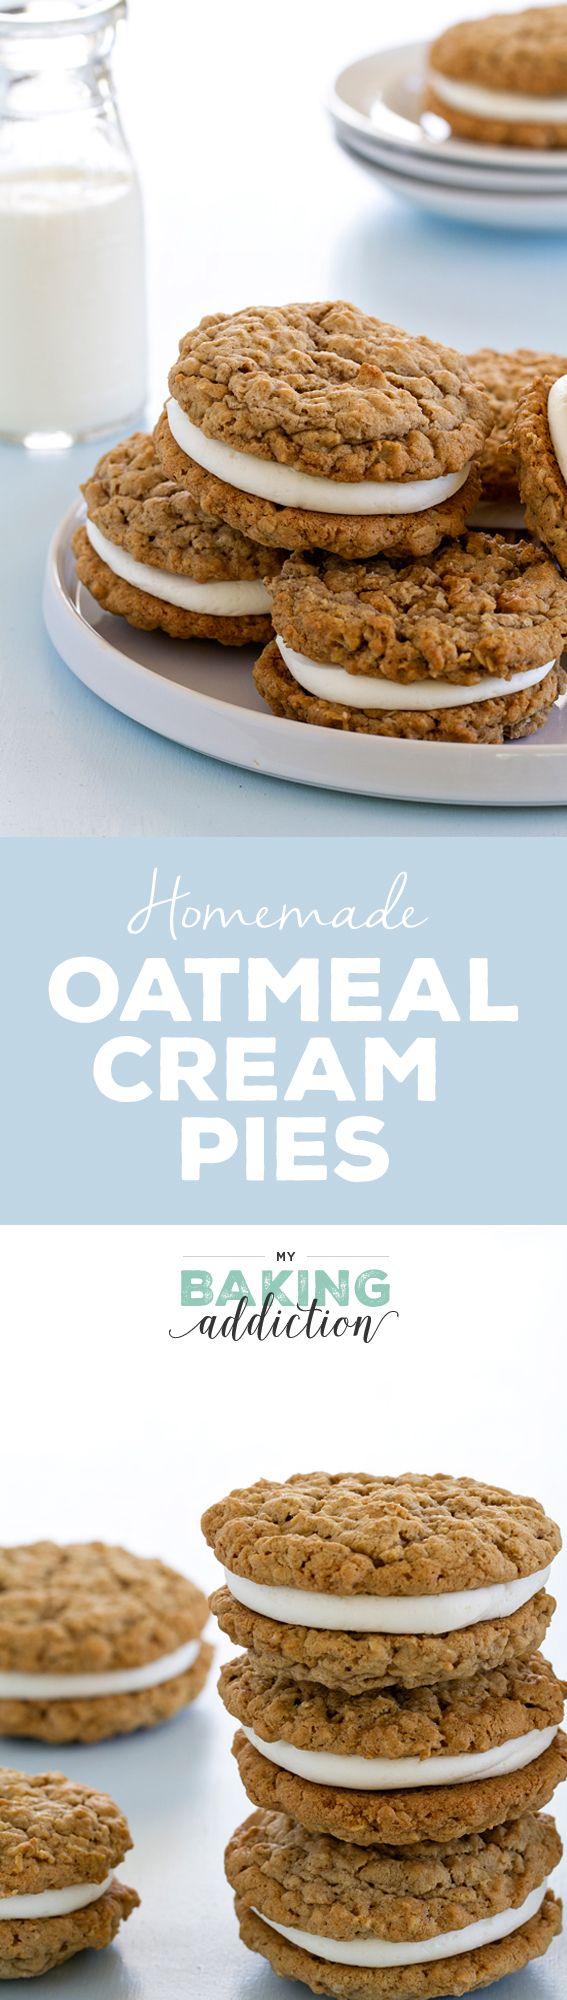 Wedding - Homemade Oatmeal Cream Pies